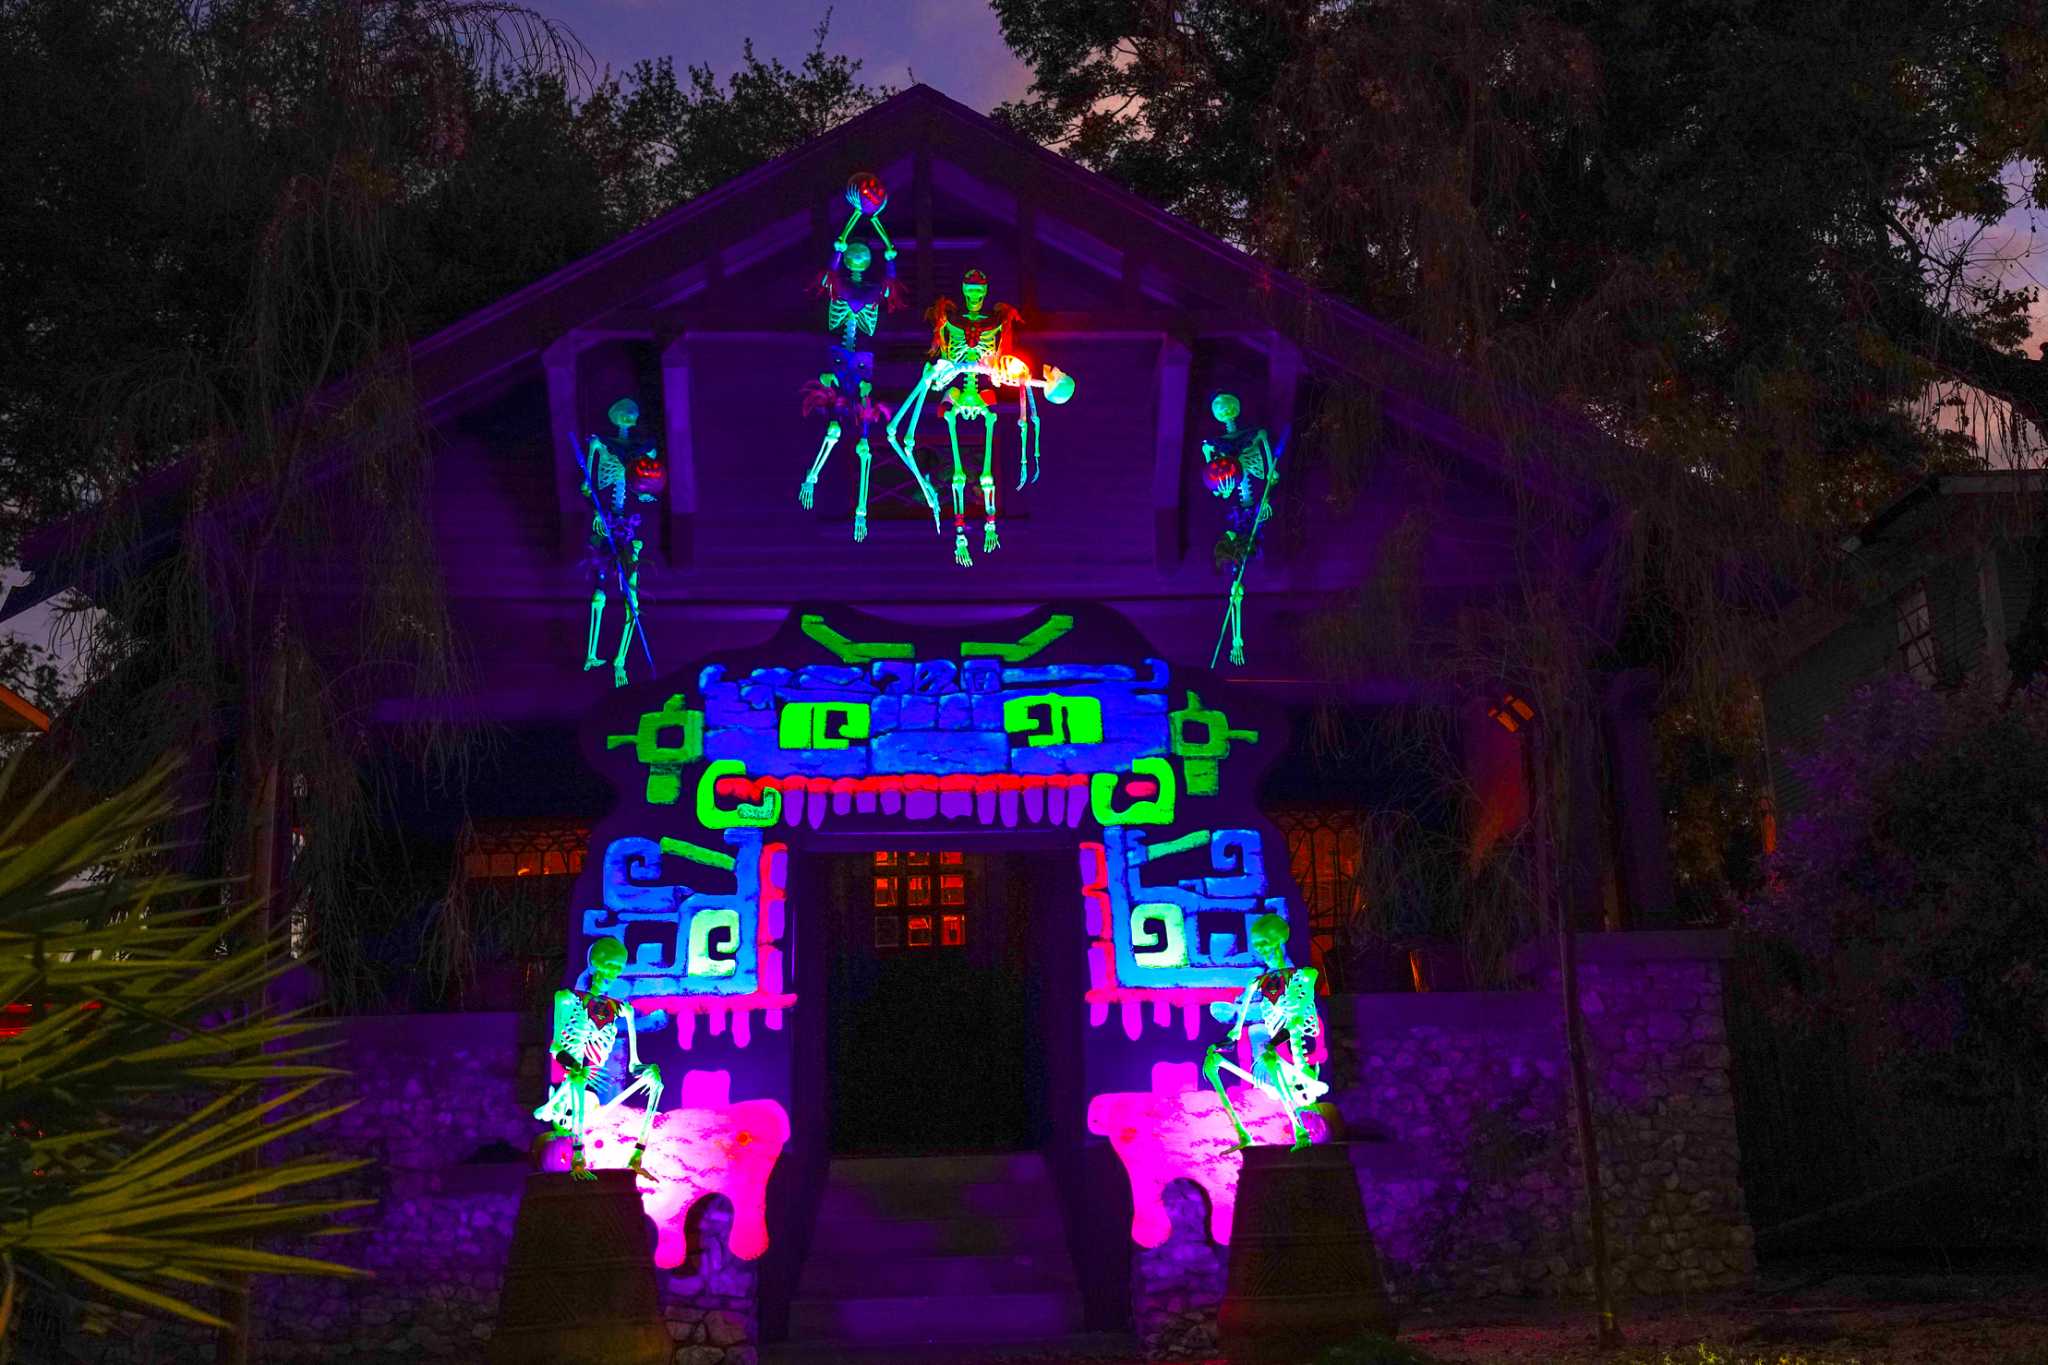 Best Houston Halloween decorations, according to readers